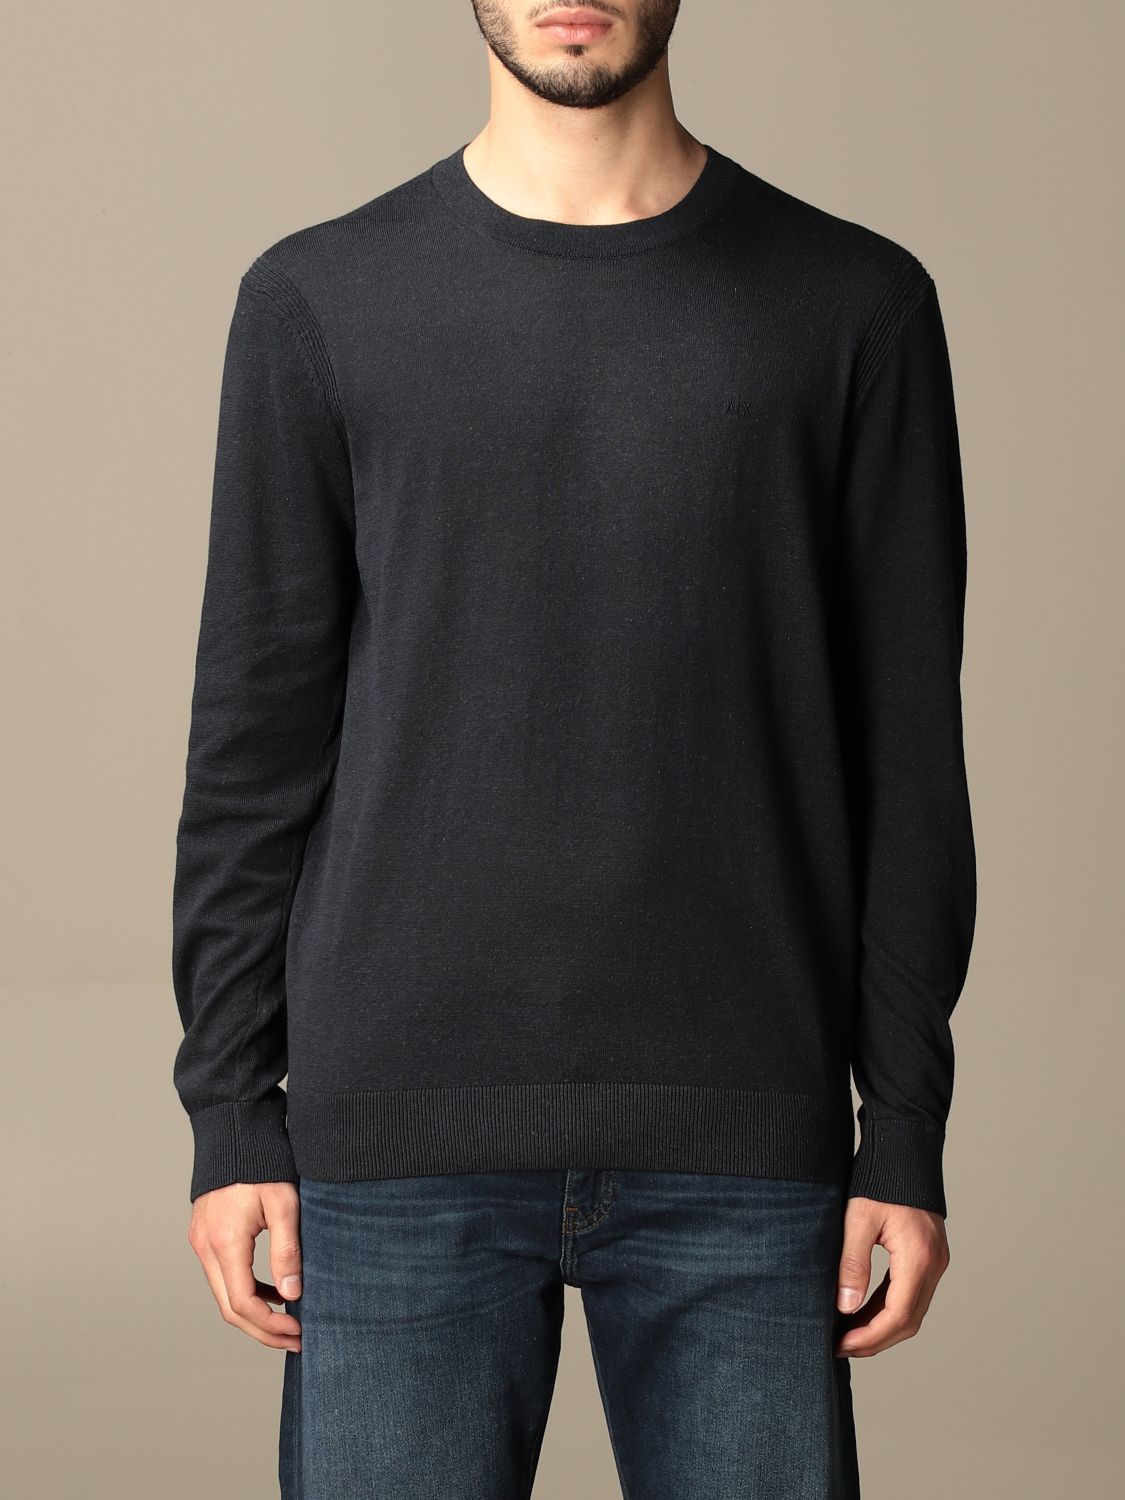 ARMANI EXCHANGE: crewneck sweater in cotton and linen - Blue | Armani ...